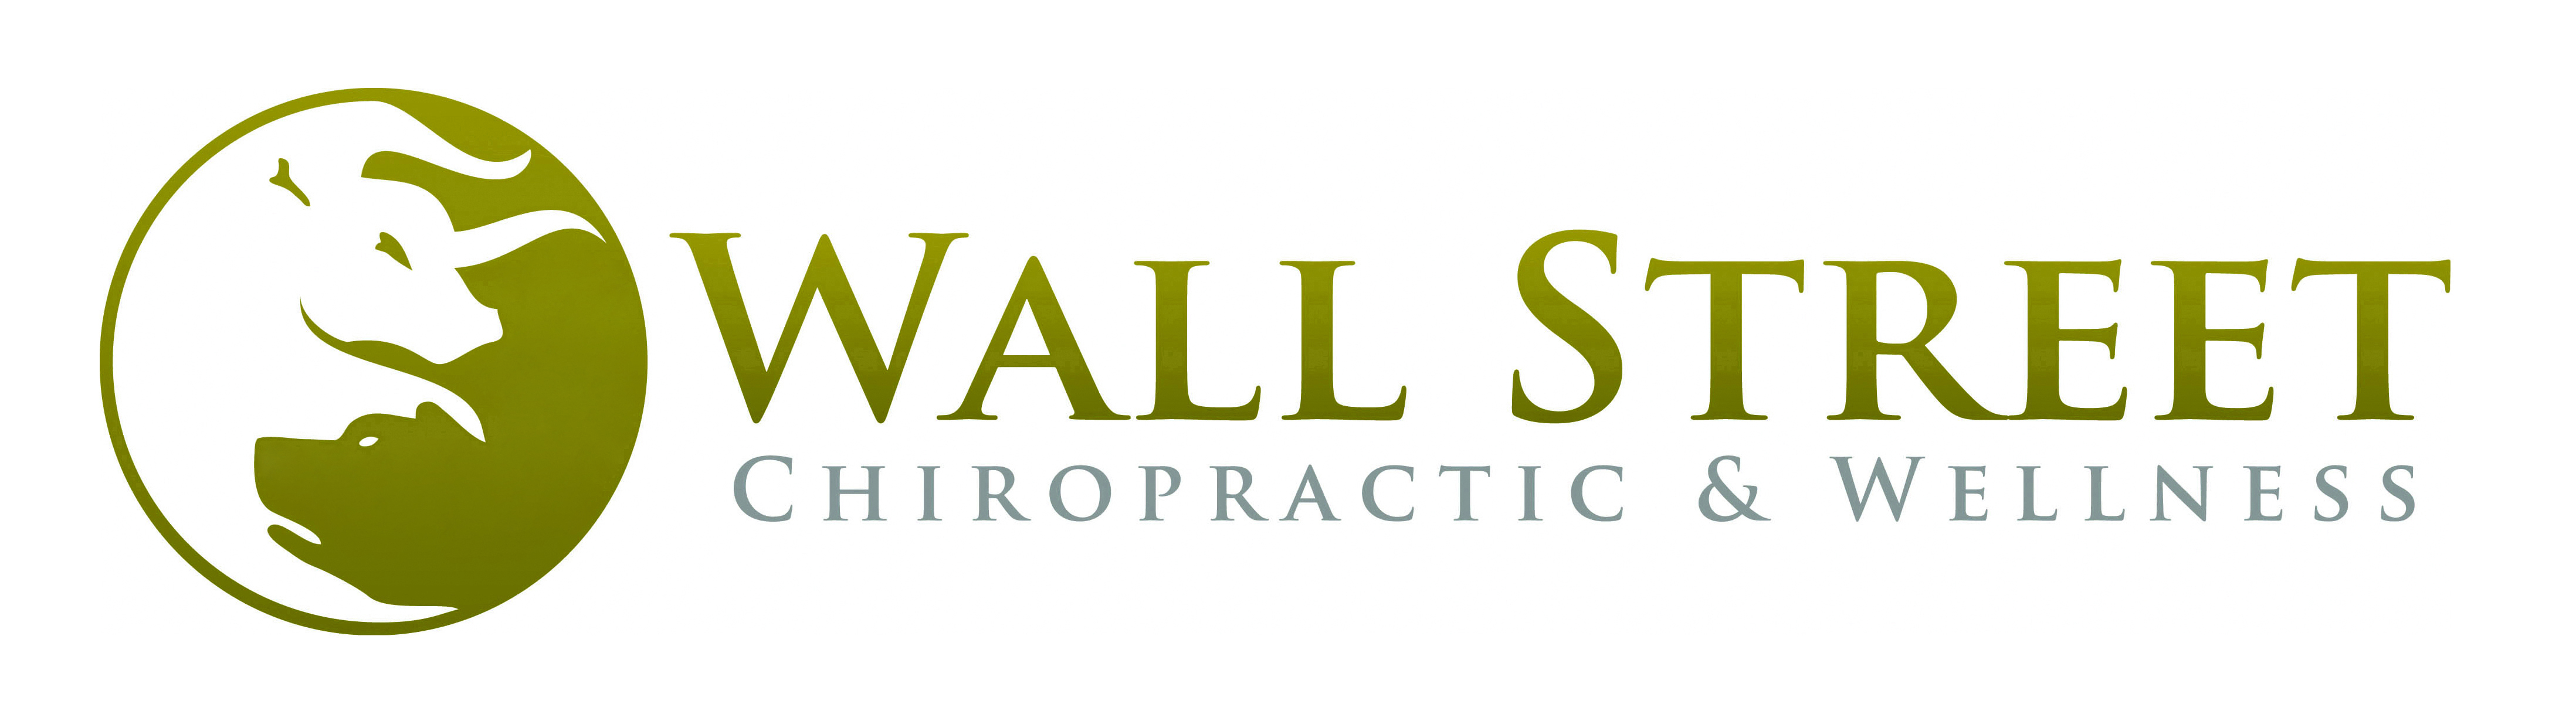 Wall Street Chiropractic & Wellness